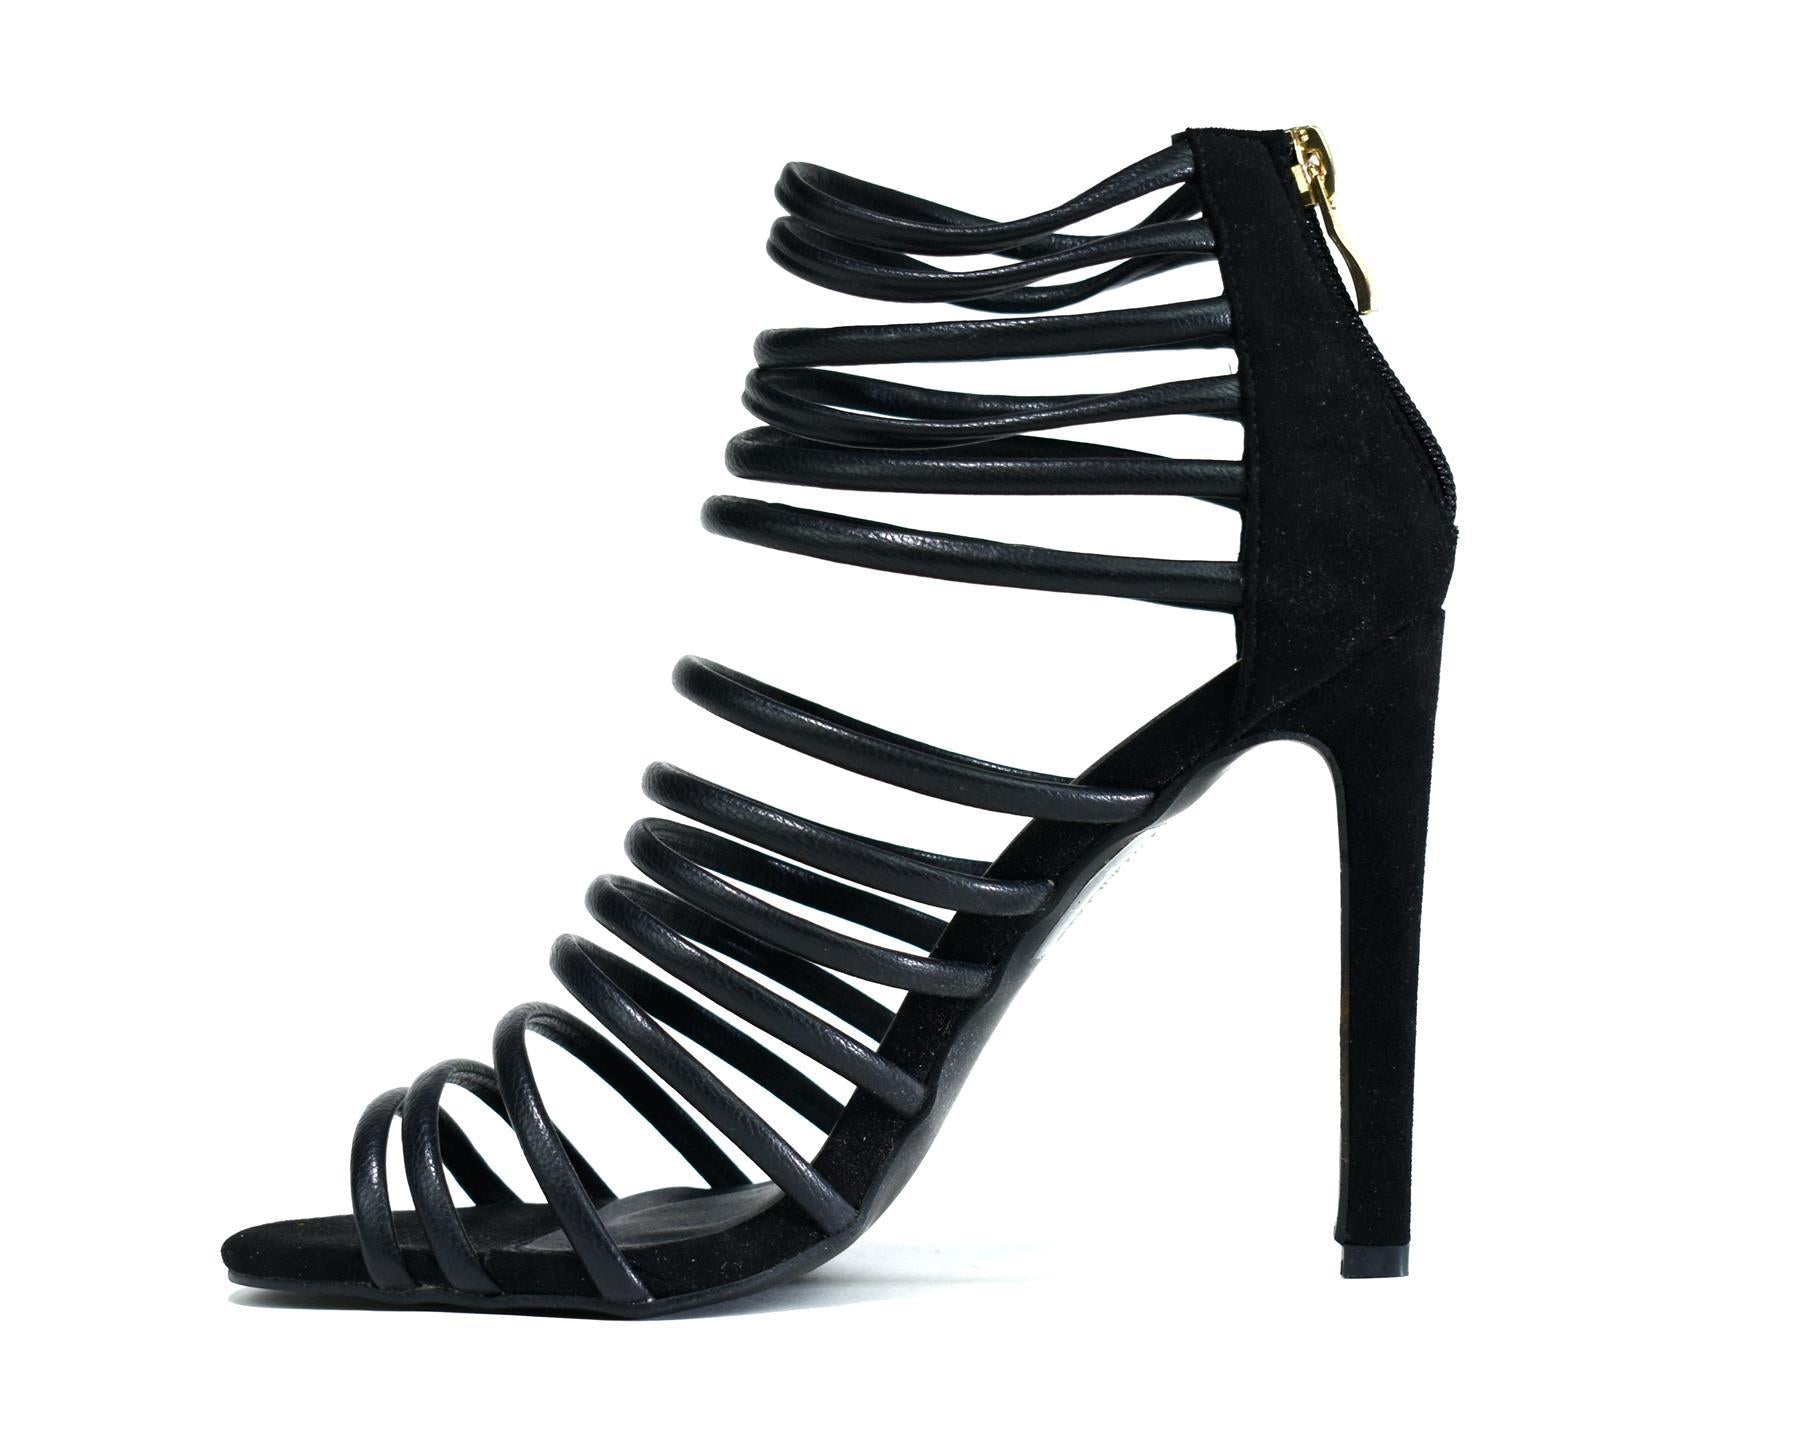 Stylish Women's 3" Heels (Black)